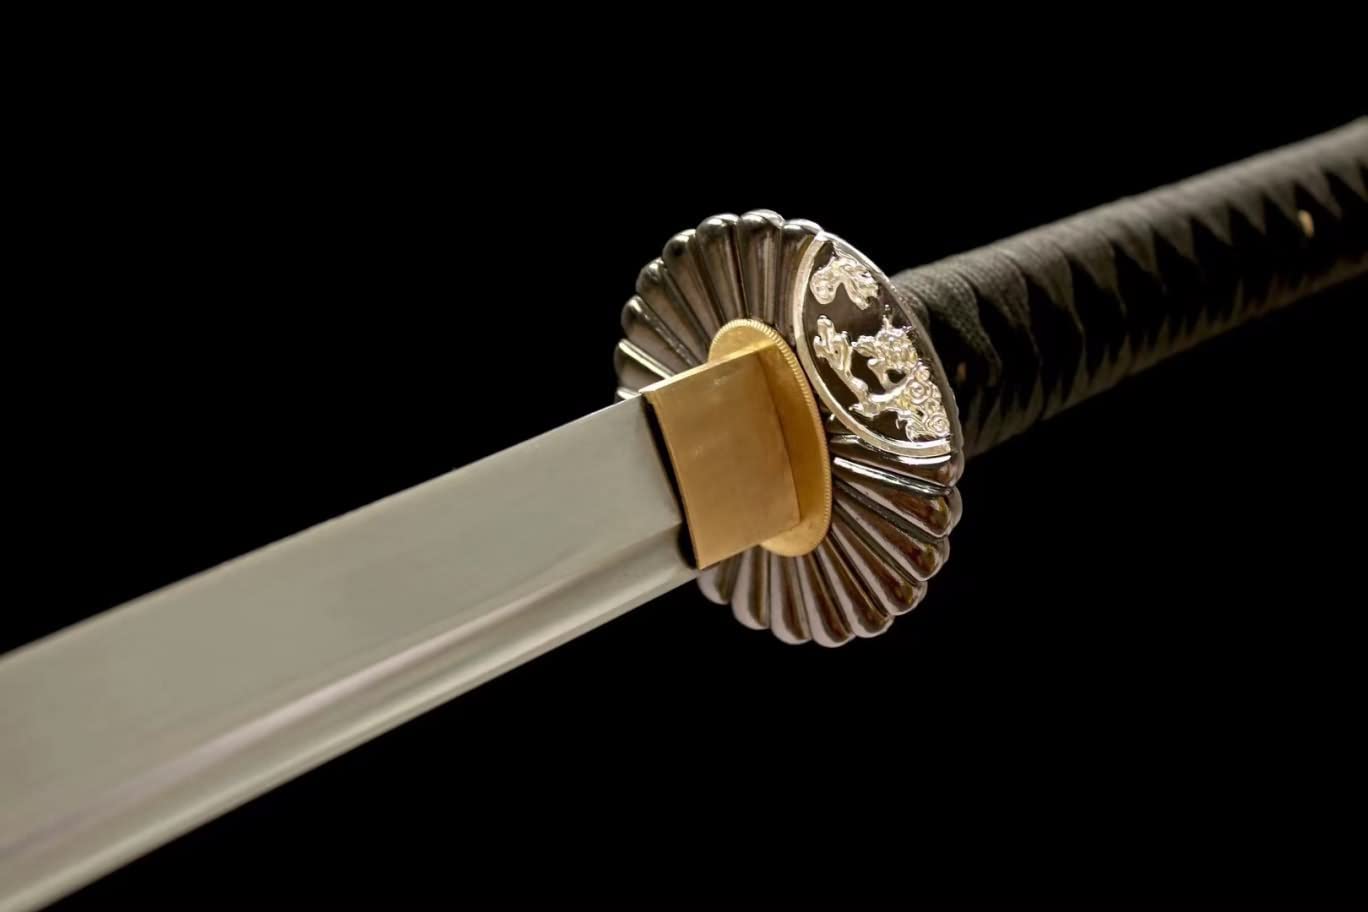 Samruai Sword Real katanas,Full Tang,Forged High Carbon Steel Blades,Battle Ready